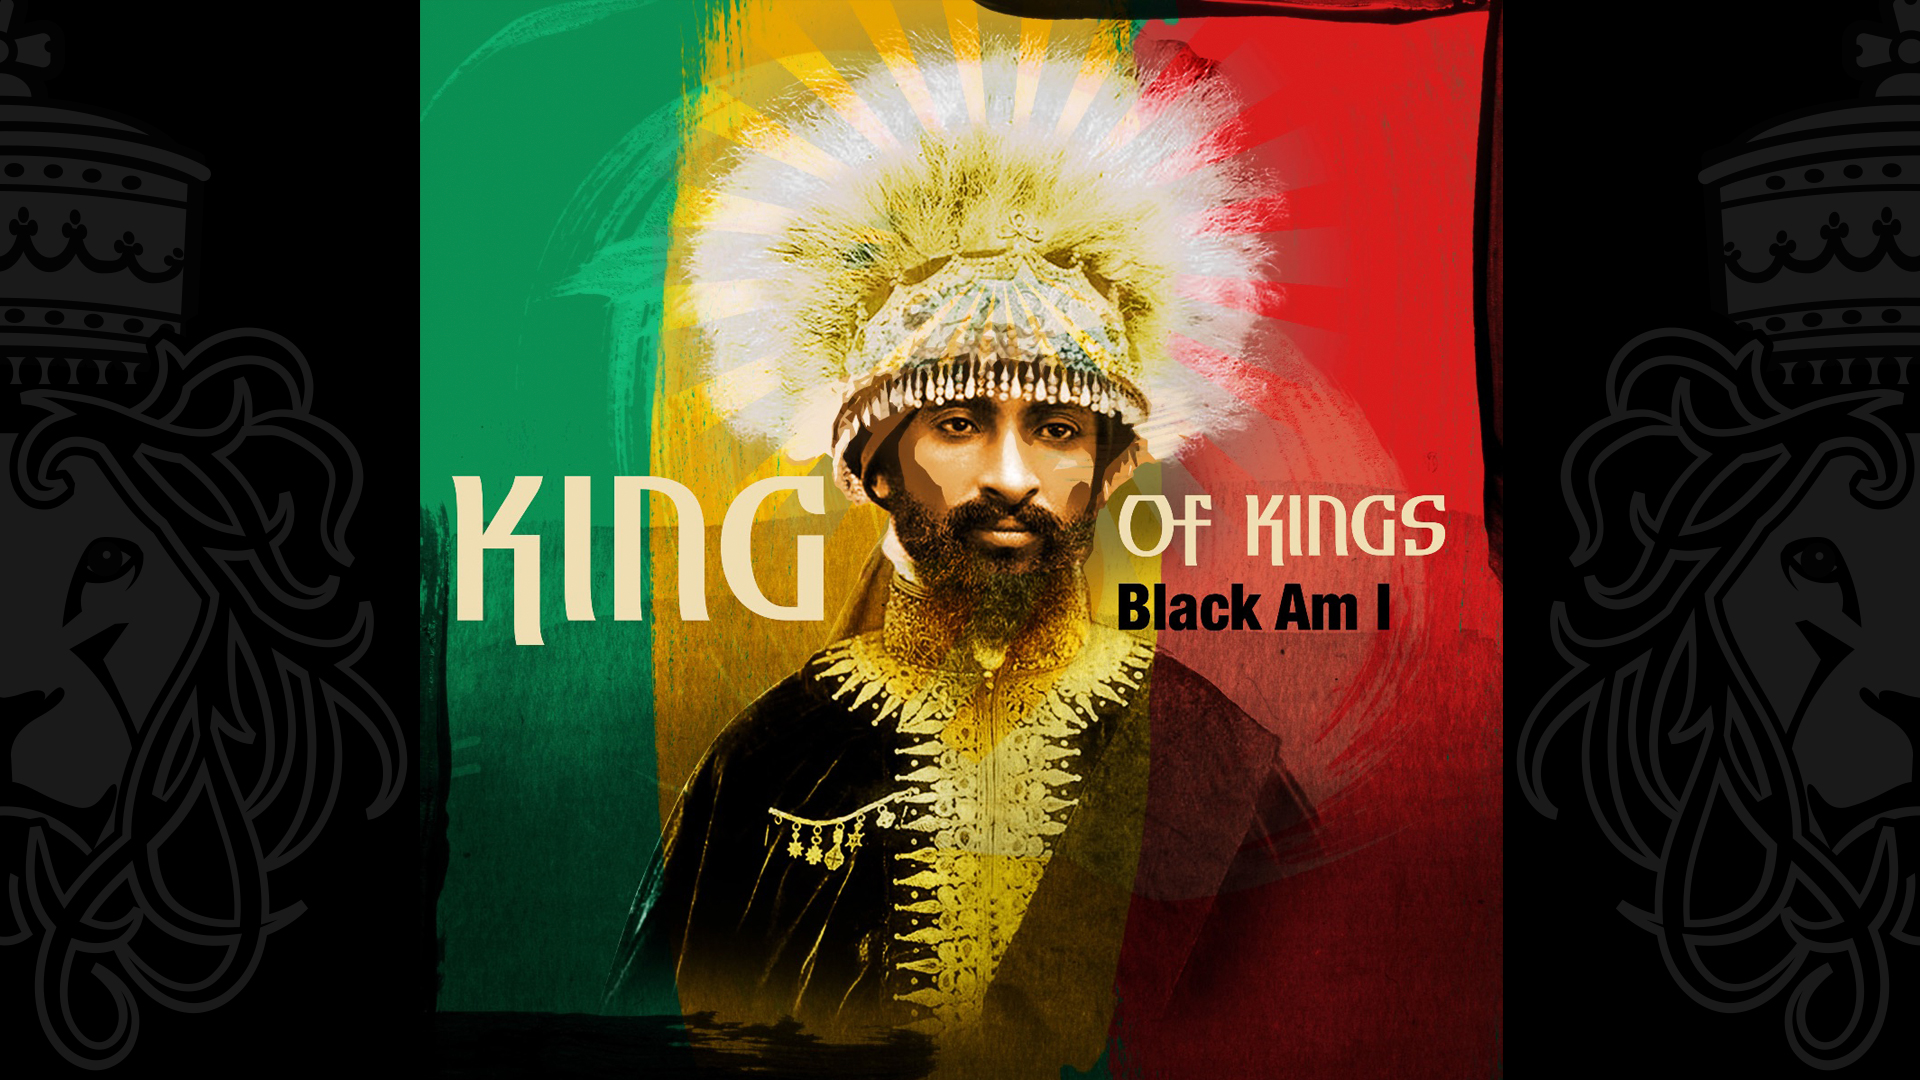 King of kings black am i